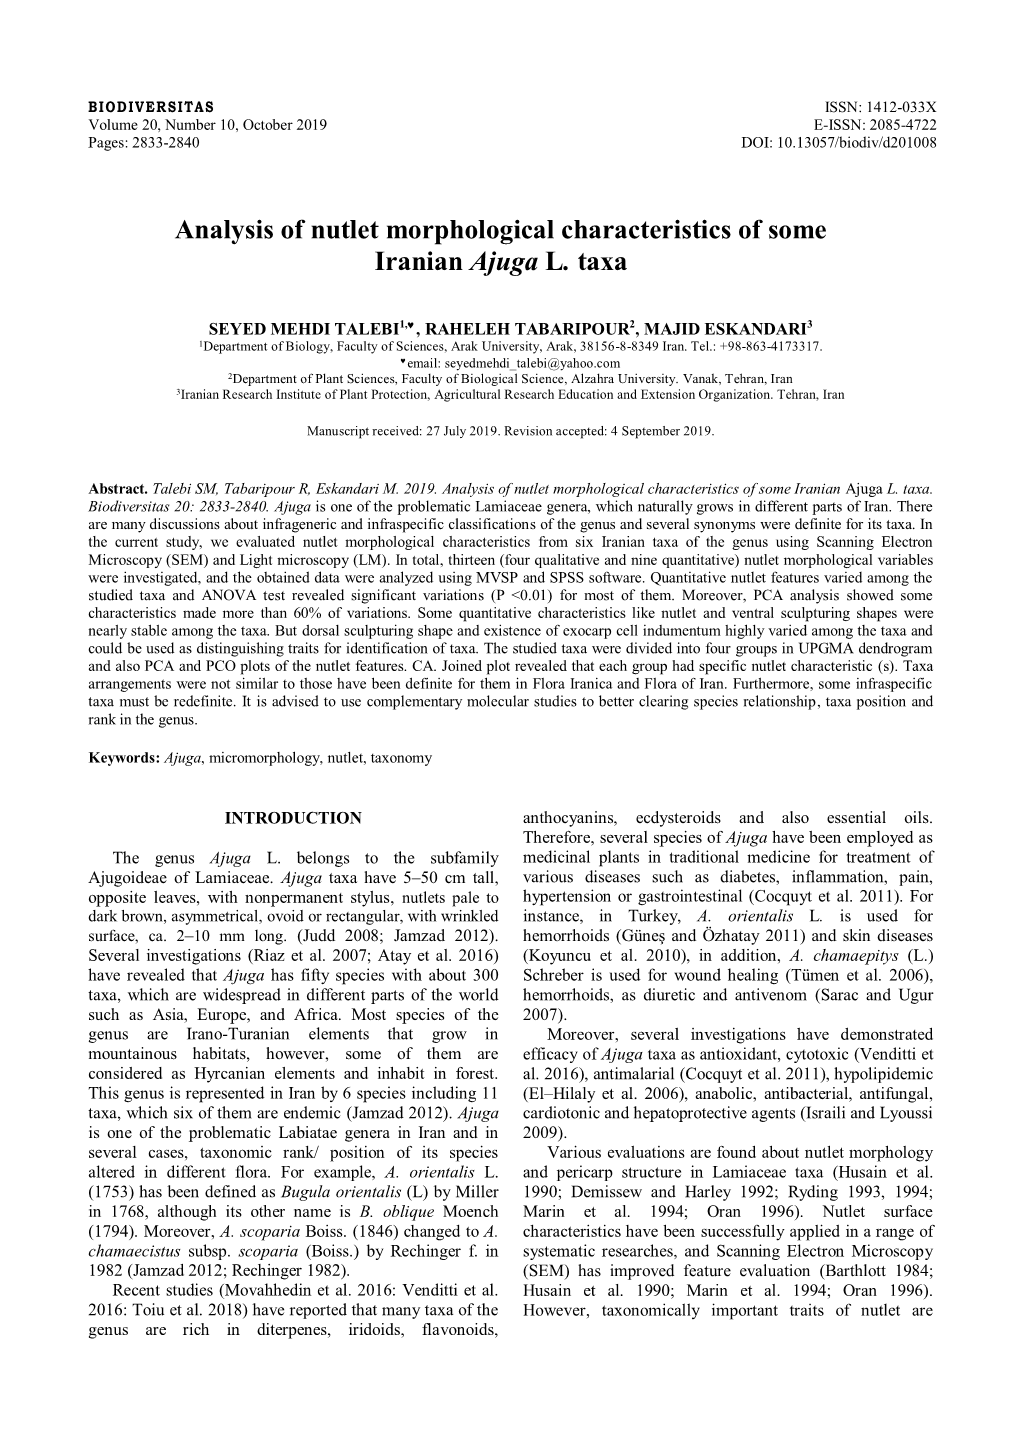 Analysis of Nutlet Morphological Characteristics of Some Iranian Ajuga L